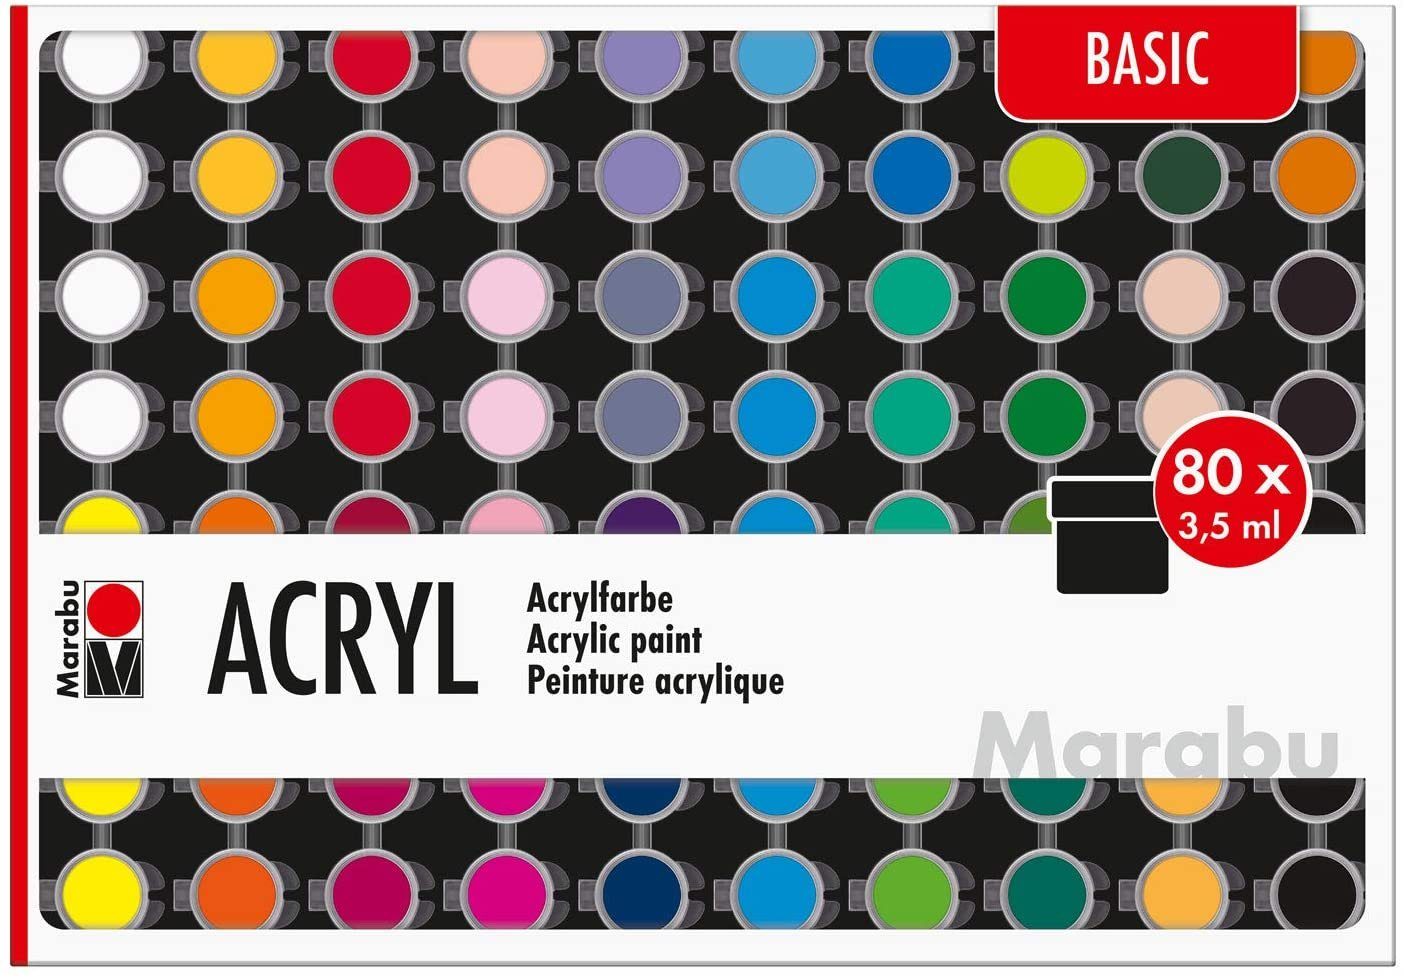 Marabu Acrylfarbe Marabu Acrylfarben-Set "BASIC", 80 x 3,5 ml